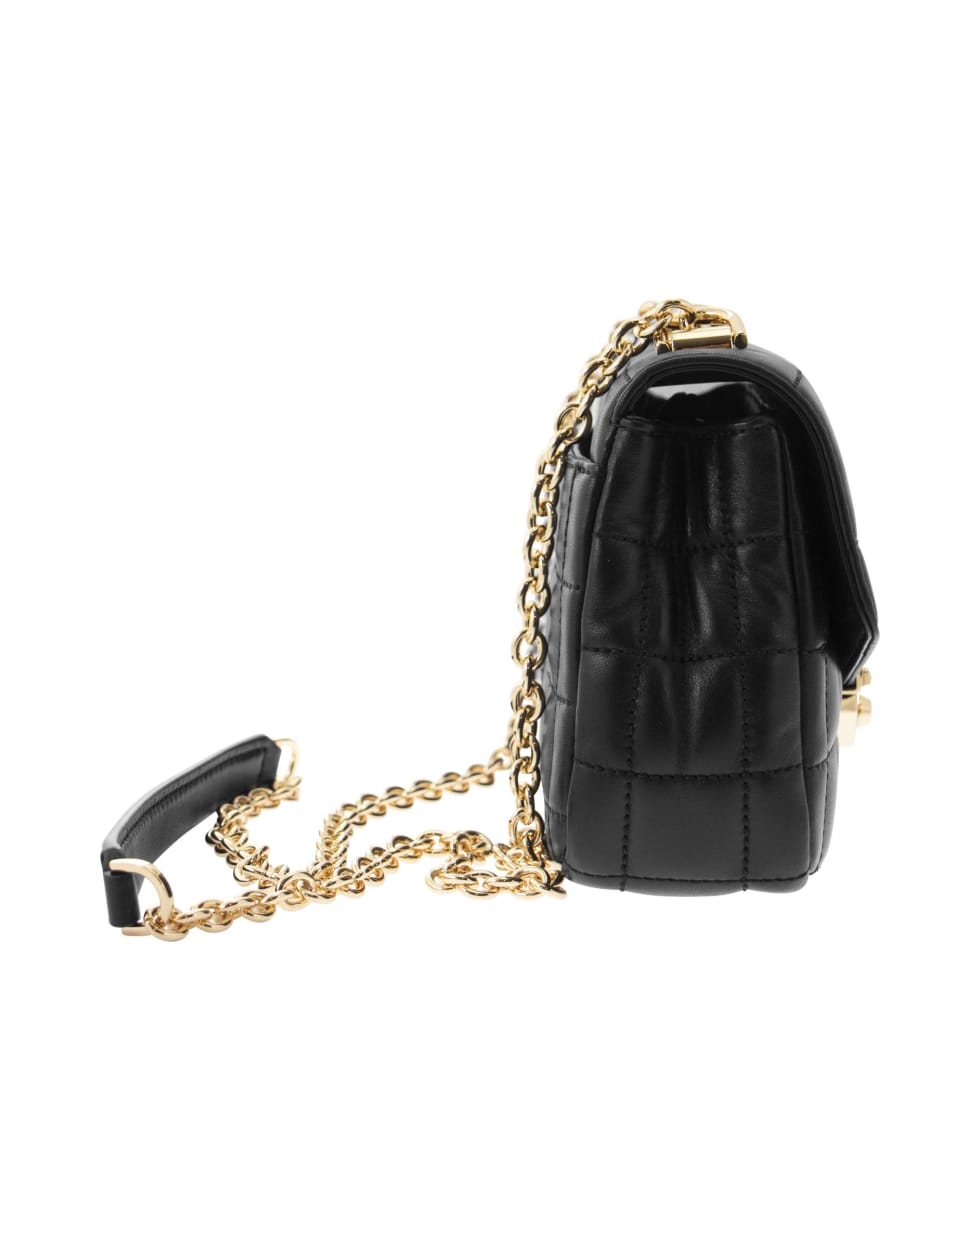 Michael Kors Soho - Small Quilted Leather Shoulder Bag - Black